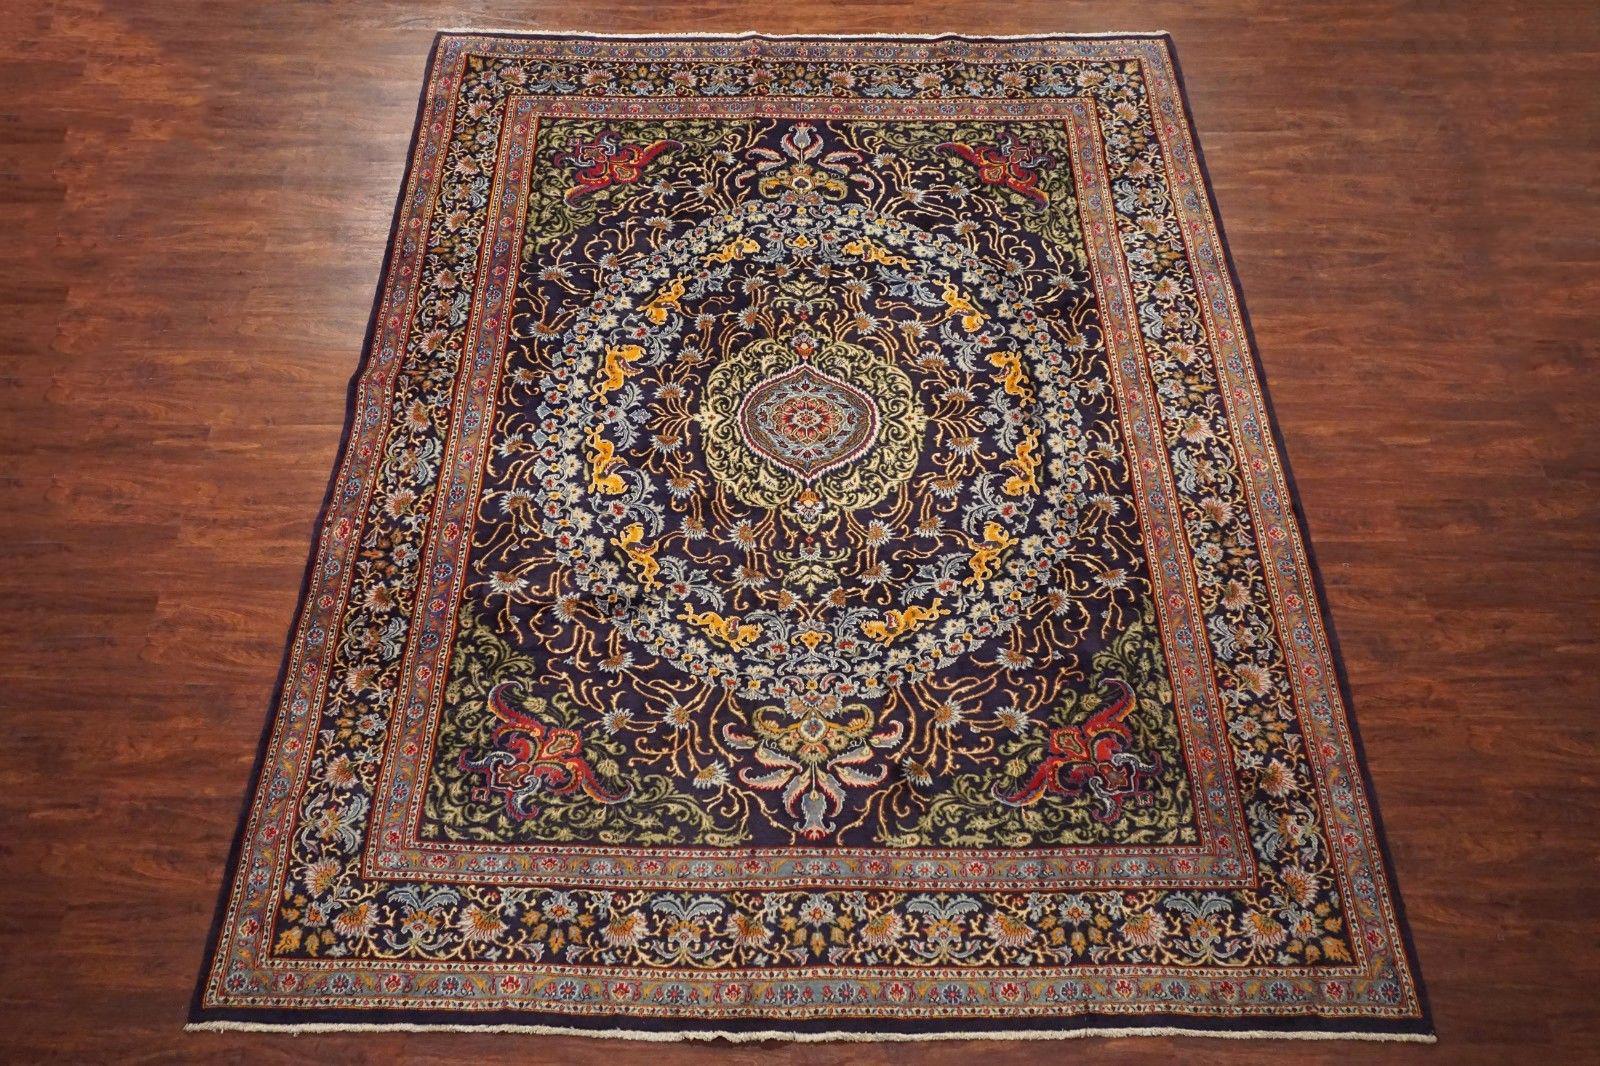 1960s Persian Dorokhsh rug with flying unicorn motif

Measure: 9' 8